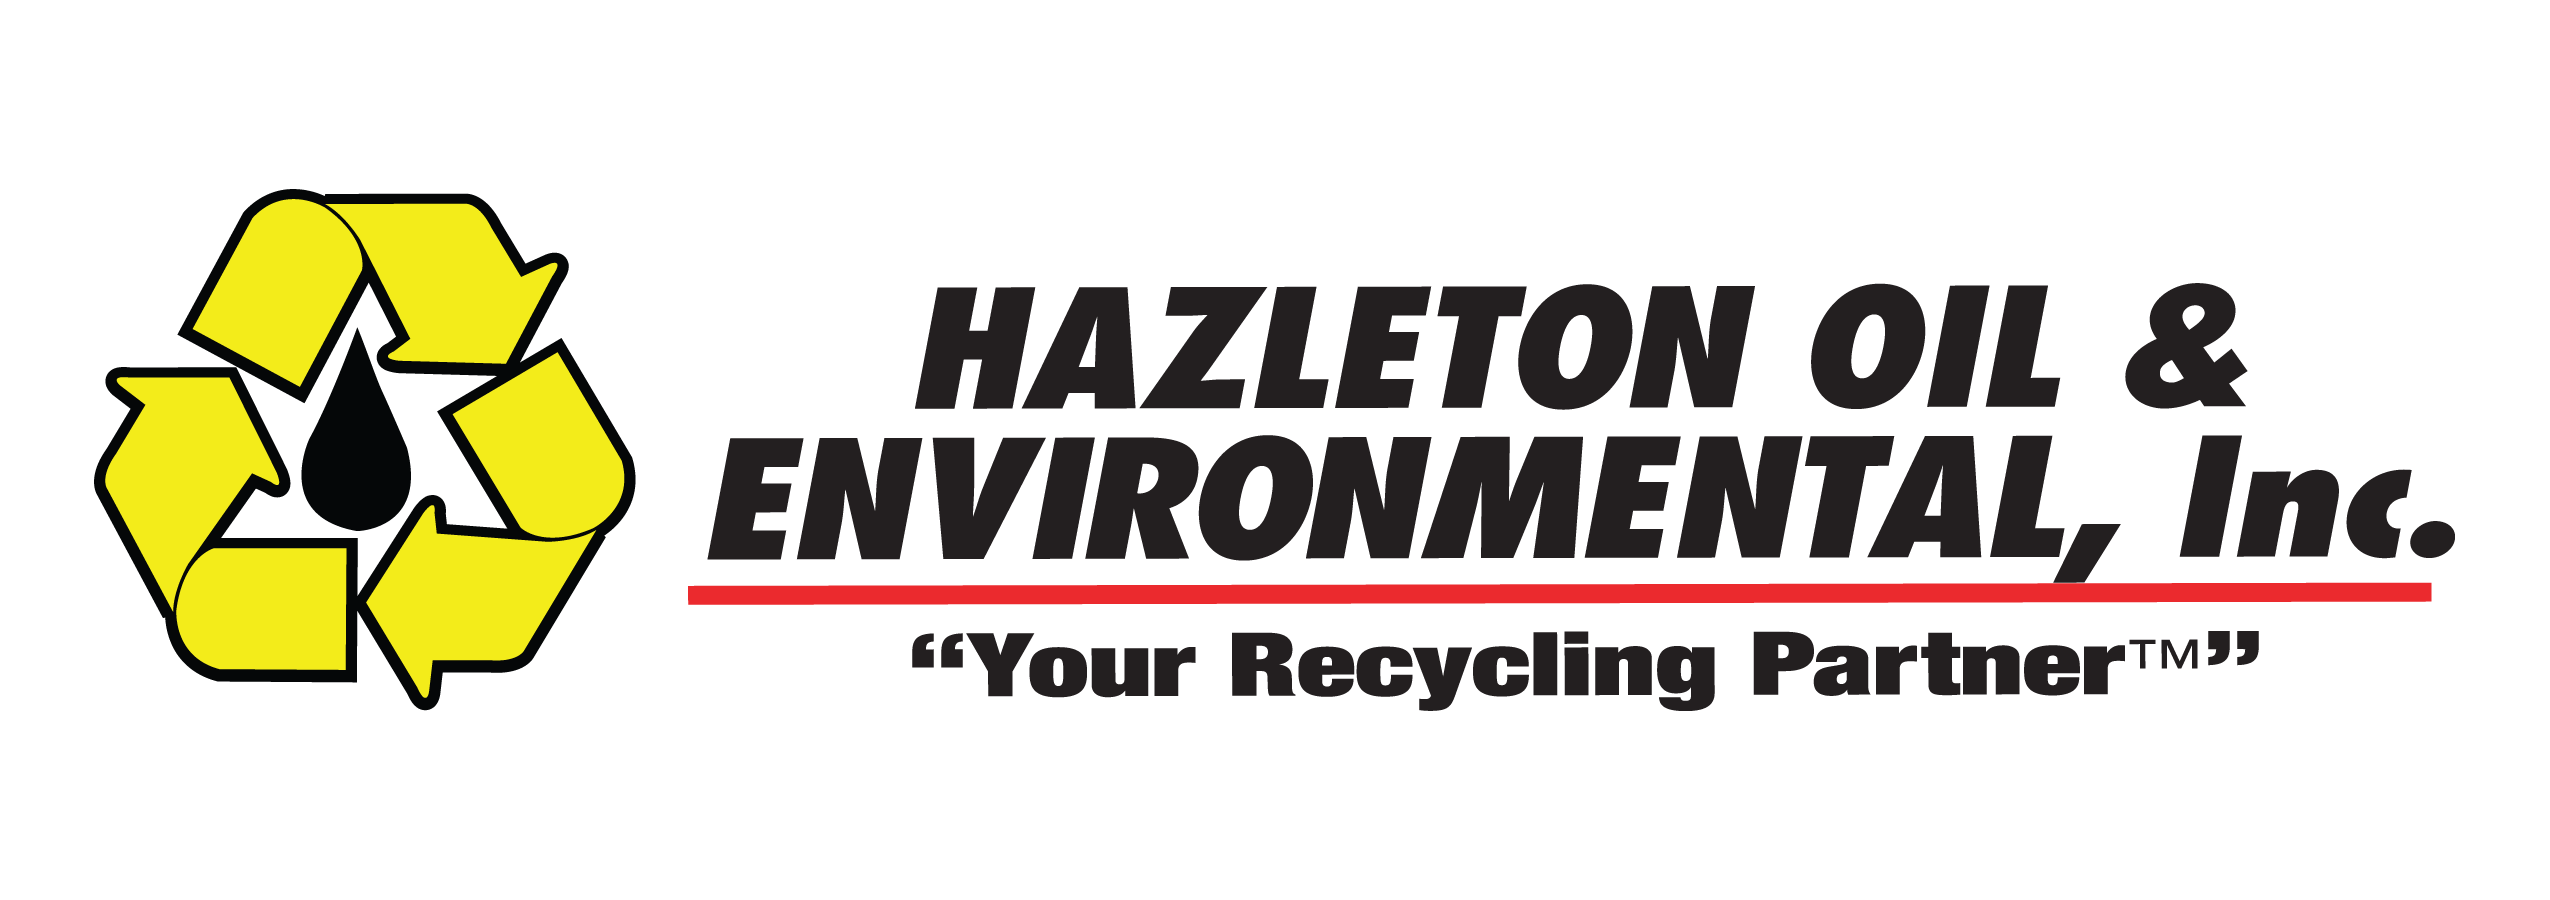 Hazleton Oil & Environmental, Inc.